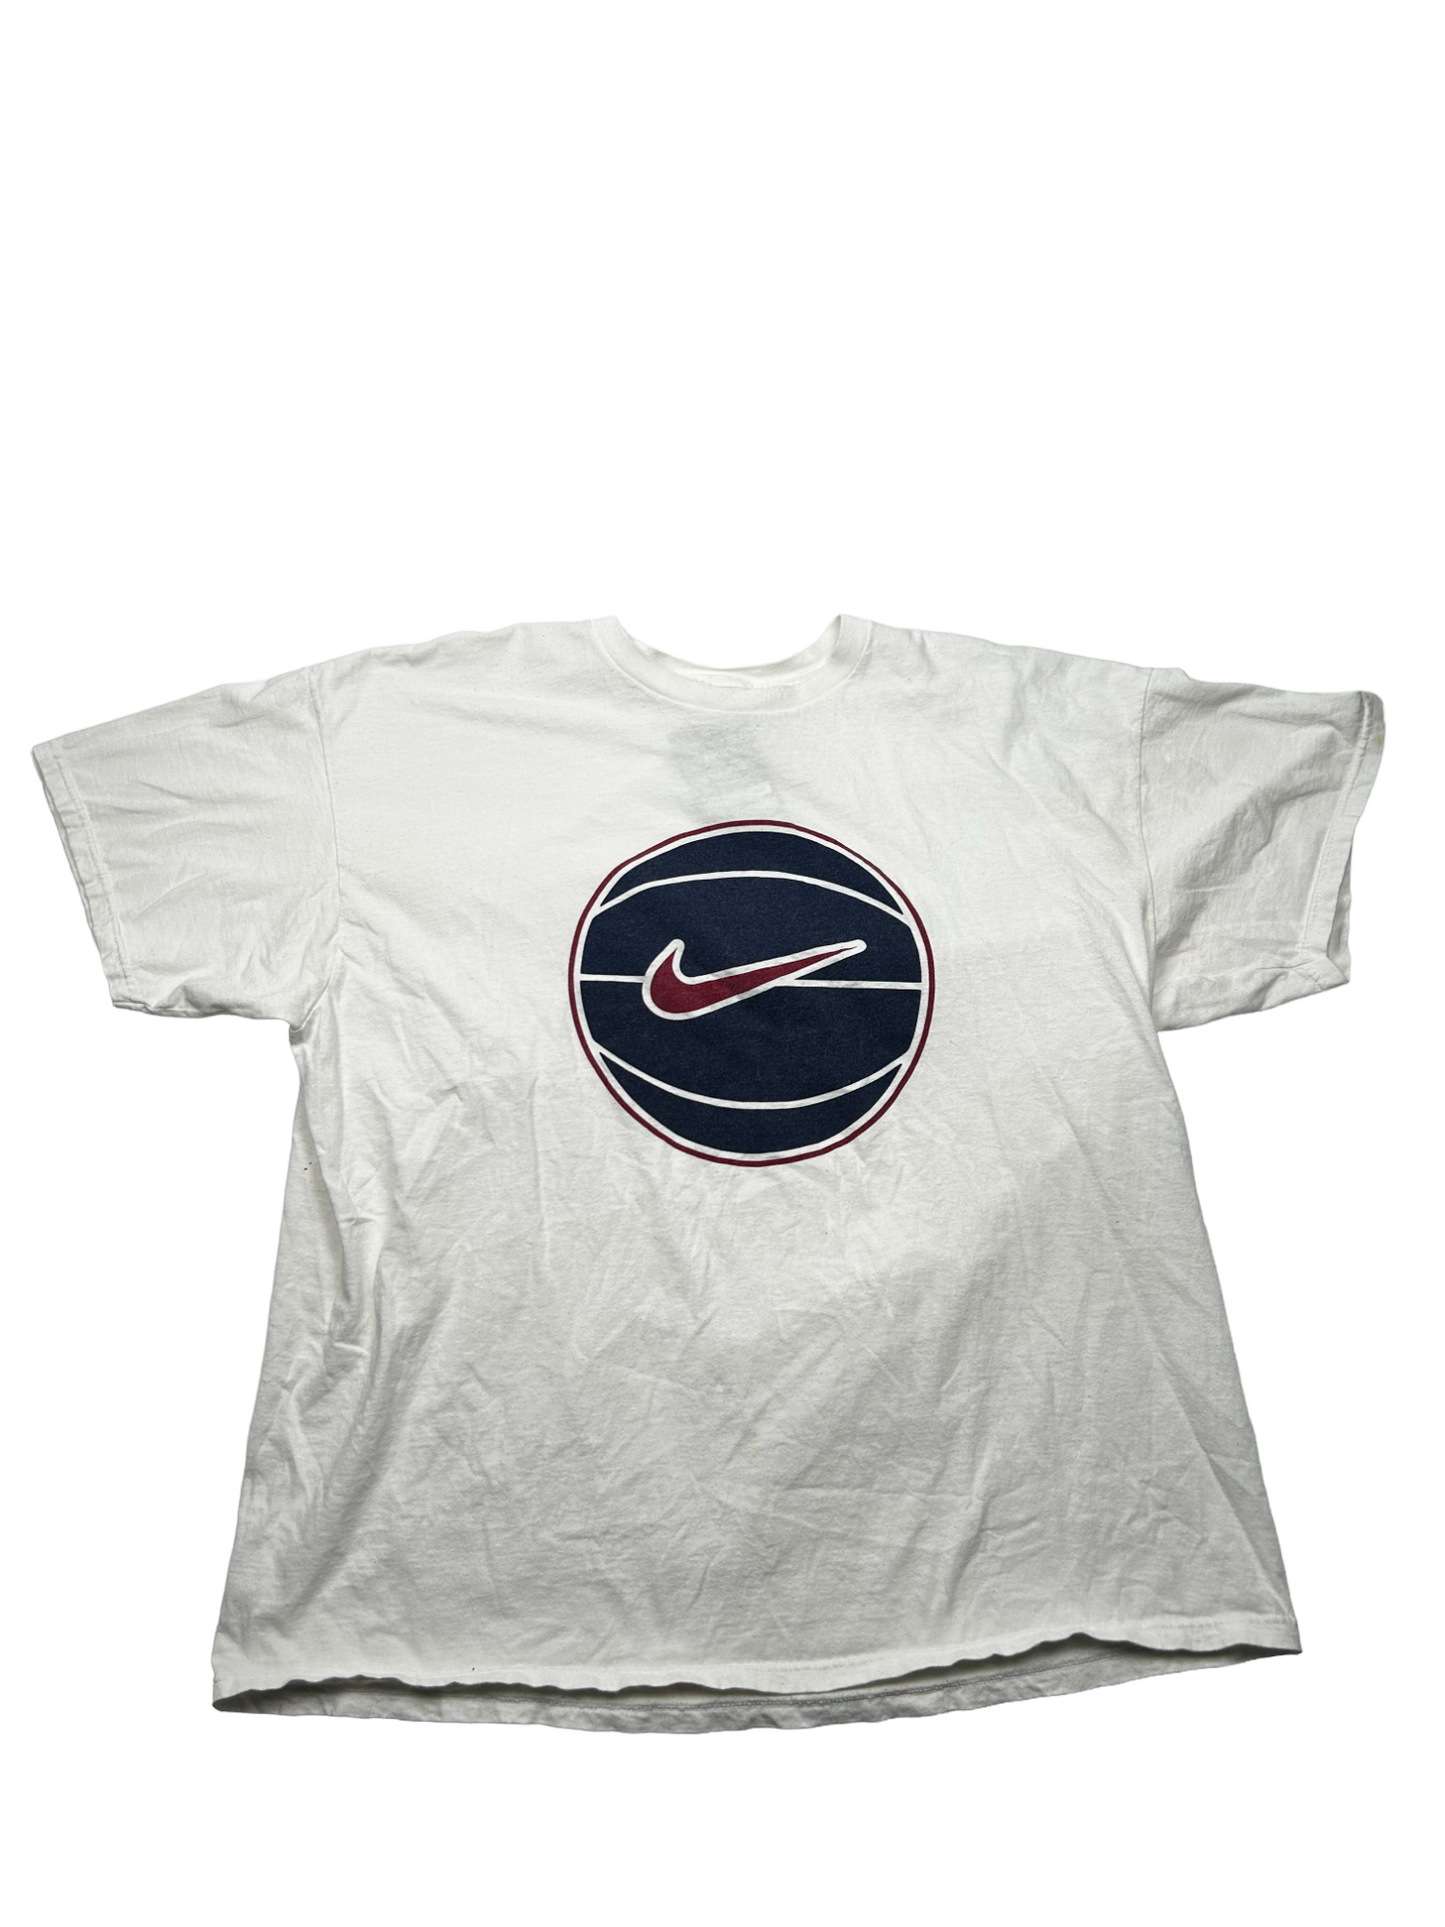 Nike Basket T-Shirt